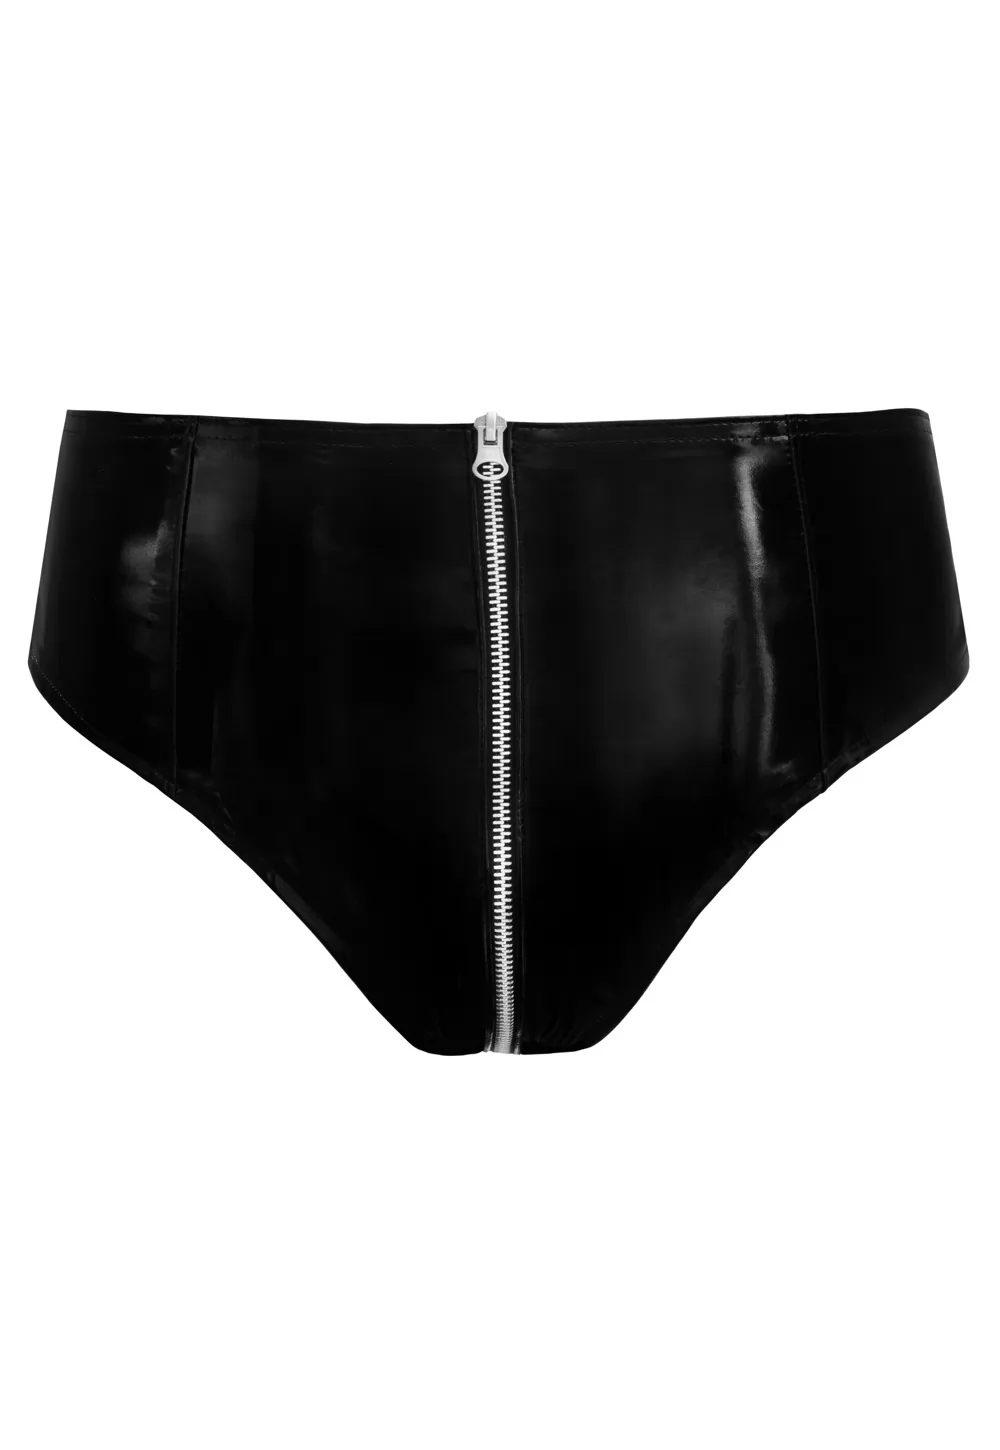 Fully zipped panty in shiny black vinyl